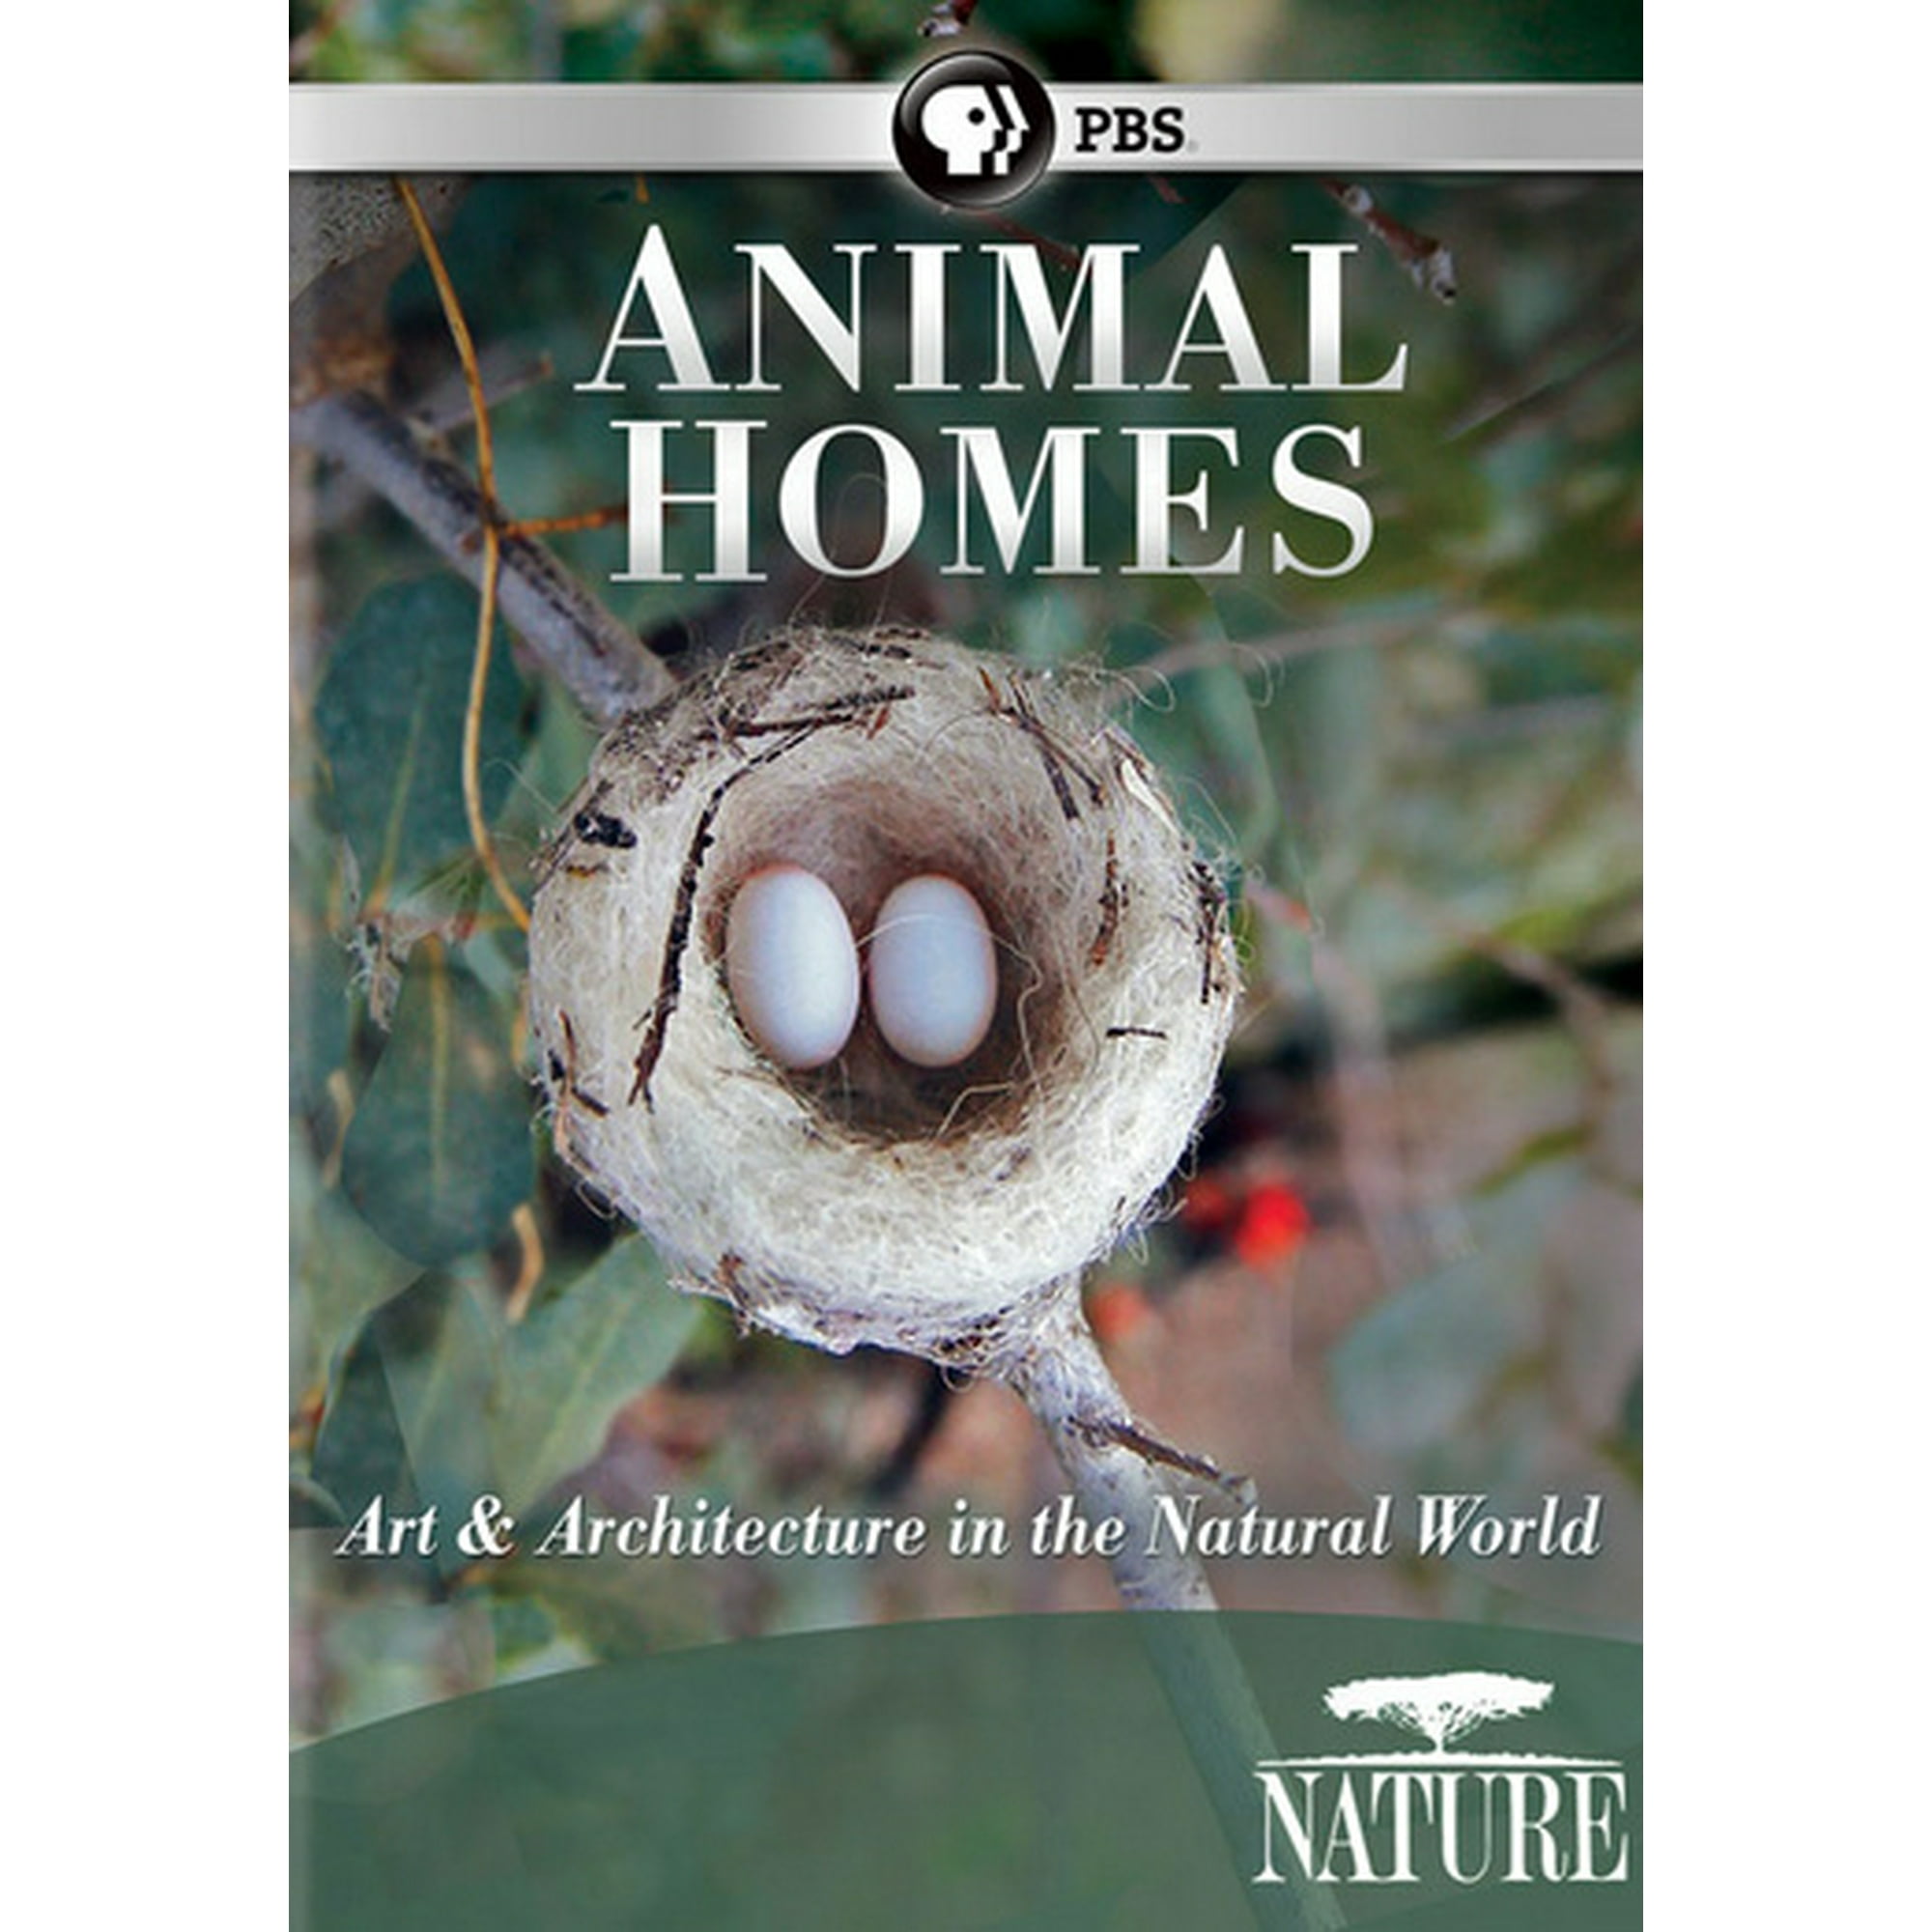 PBS NATURE-ANIMAL HOMES (DVD) DNAT63208D | Walmart Canada